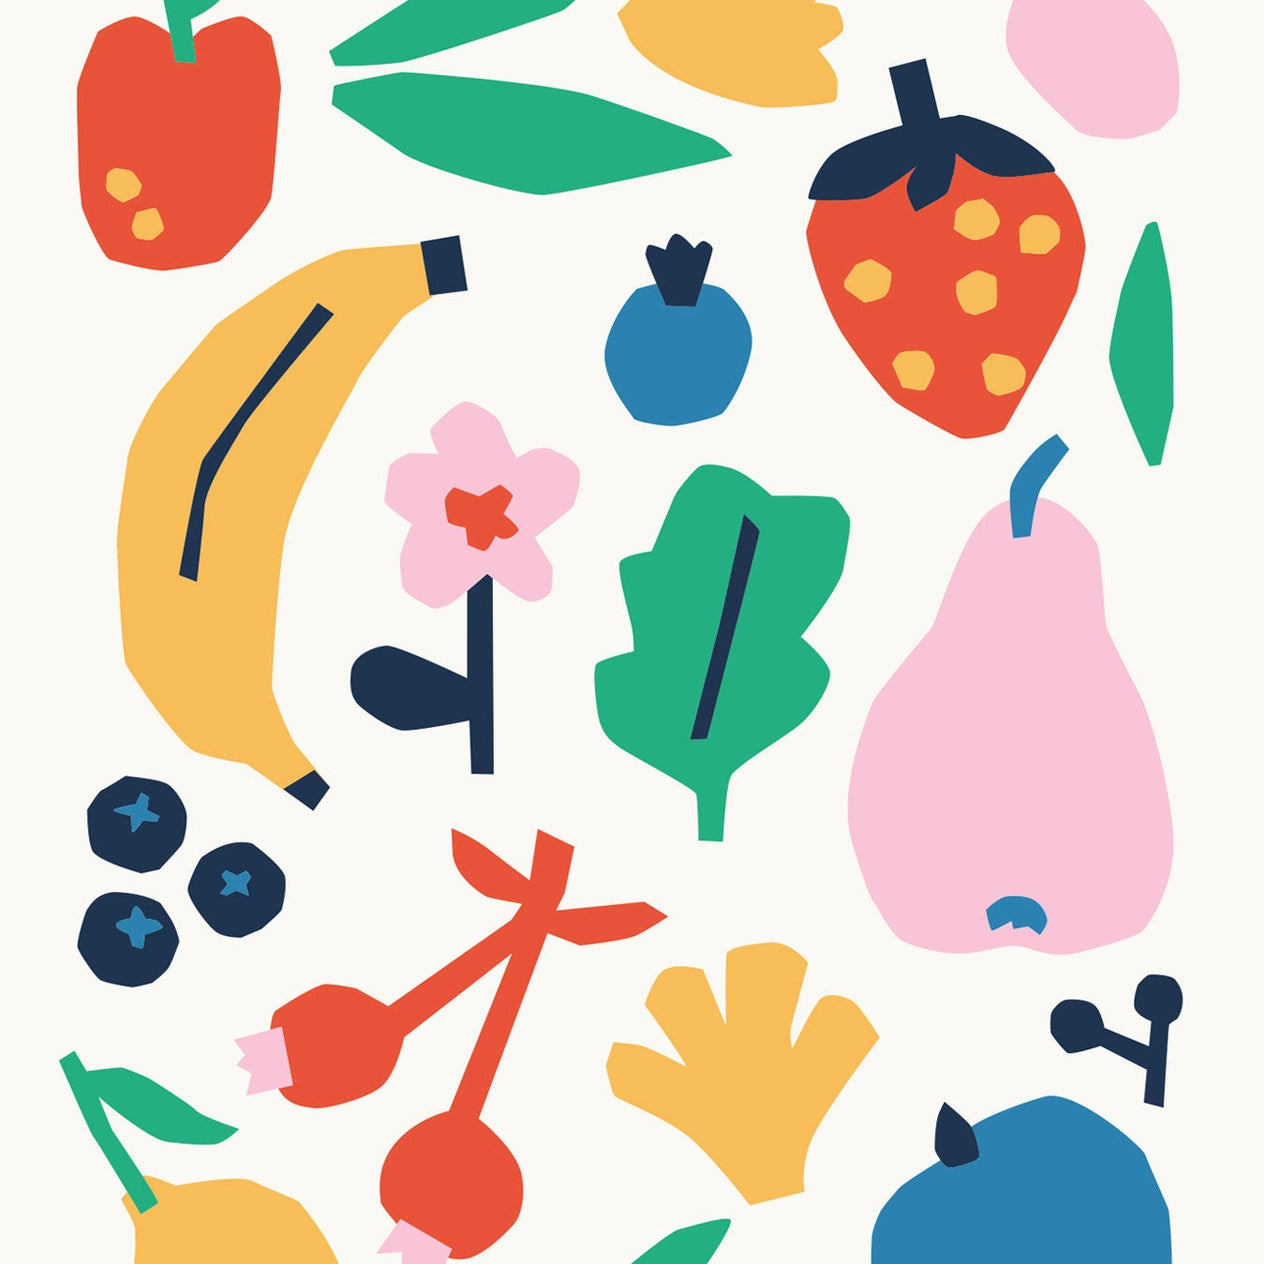 Fruits Print · Myriam Van Neste & Paperole